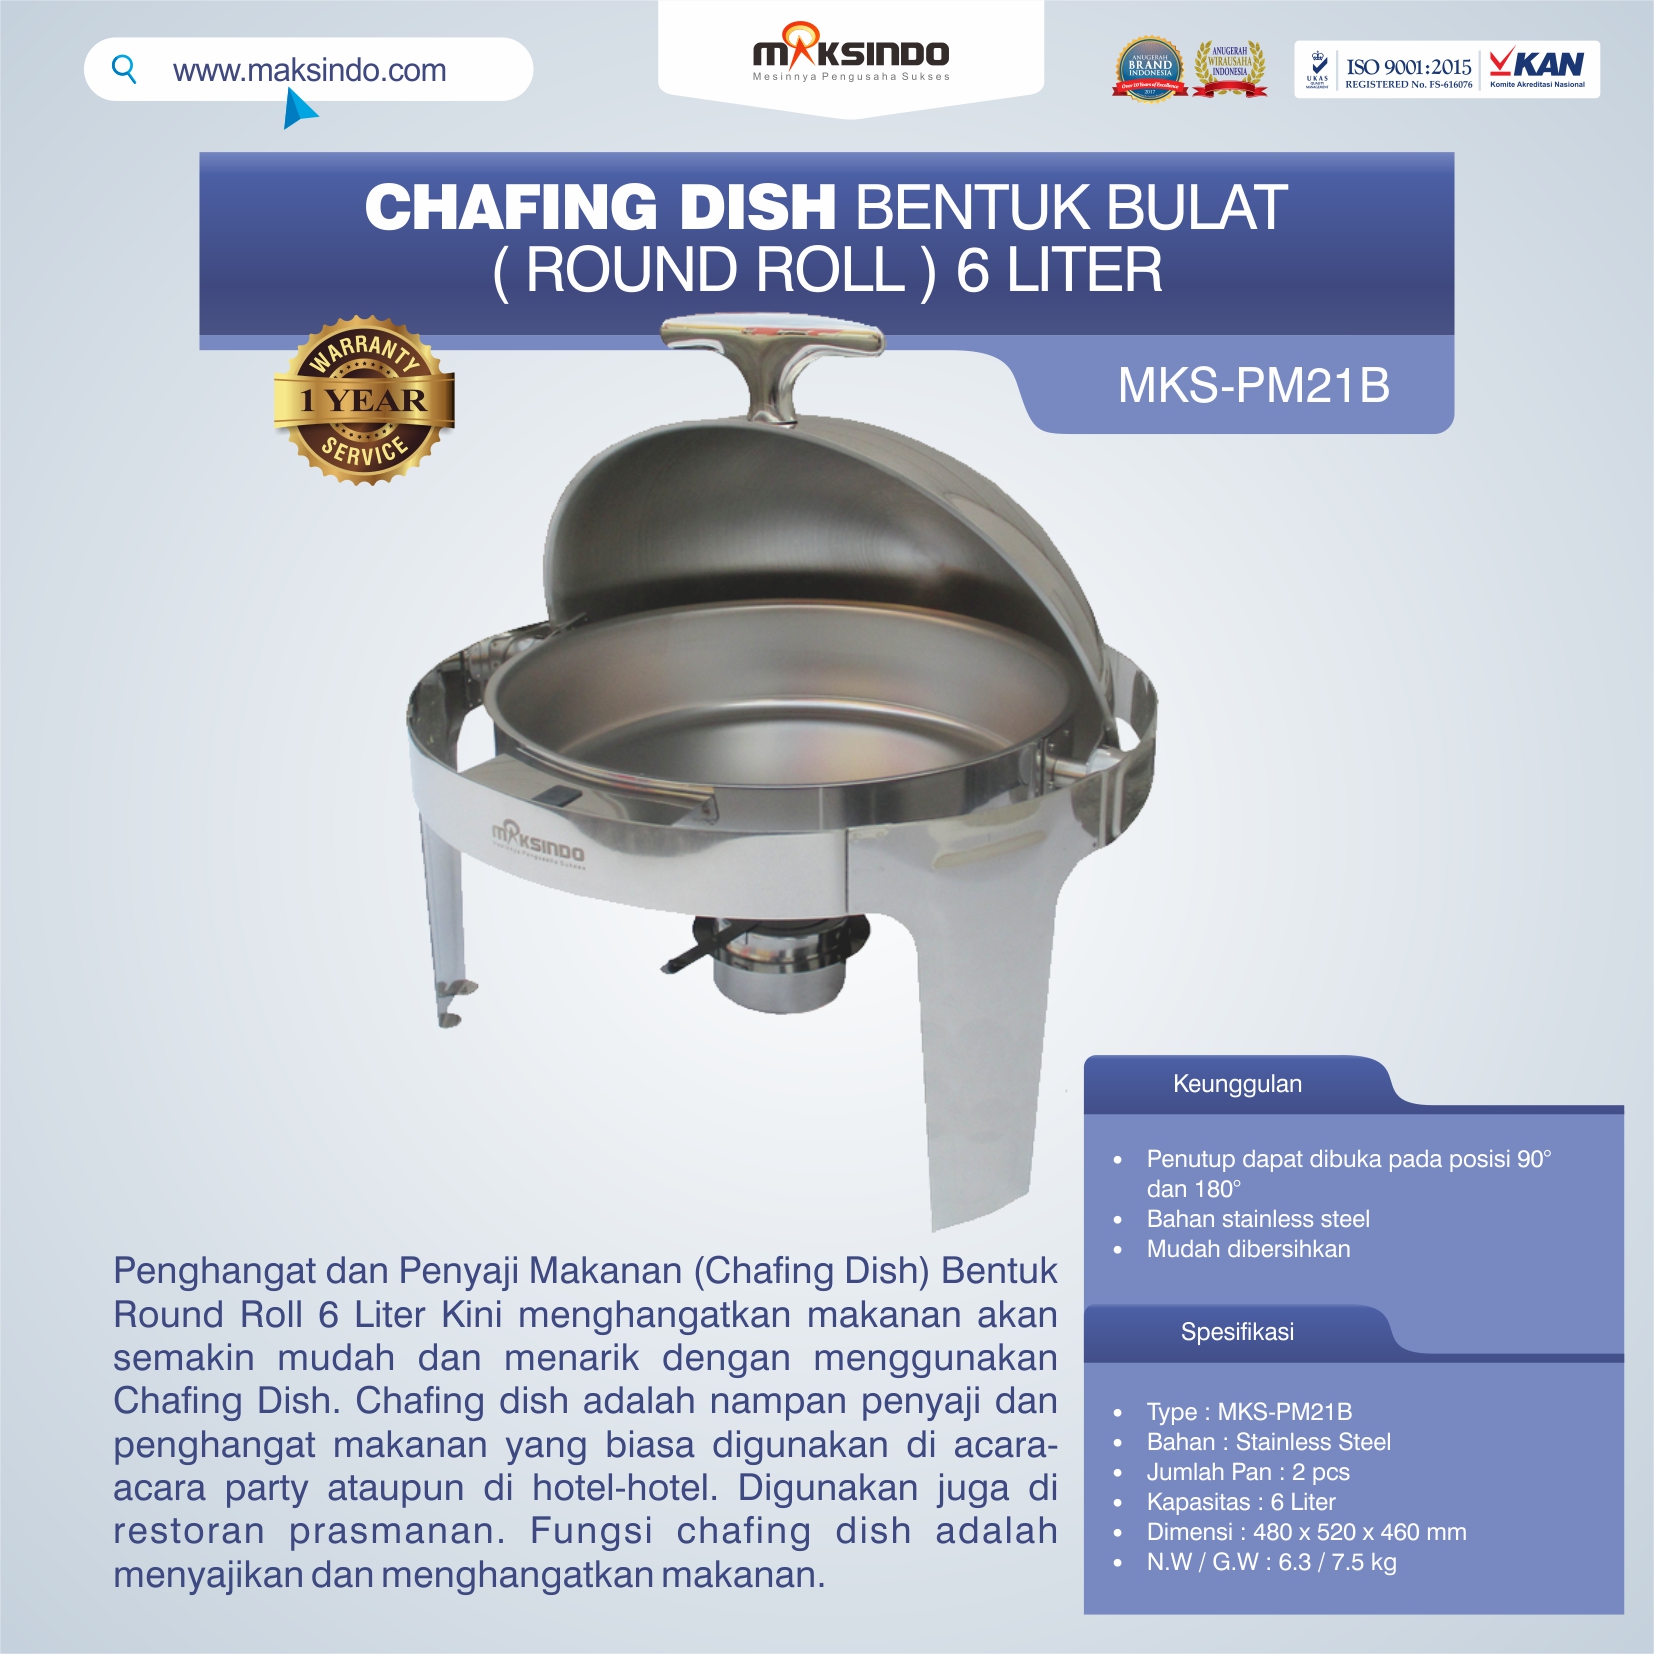 Jual Chafing Dish Bentuk Bulat (Round Roll) 6 Liter di Blitar